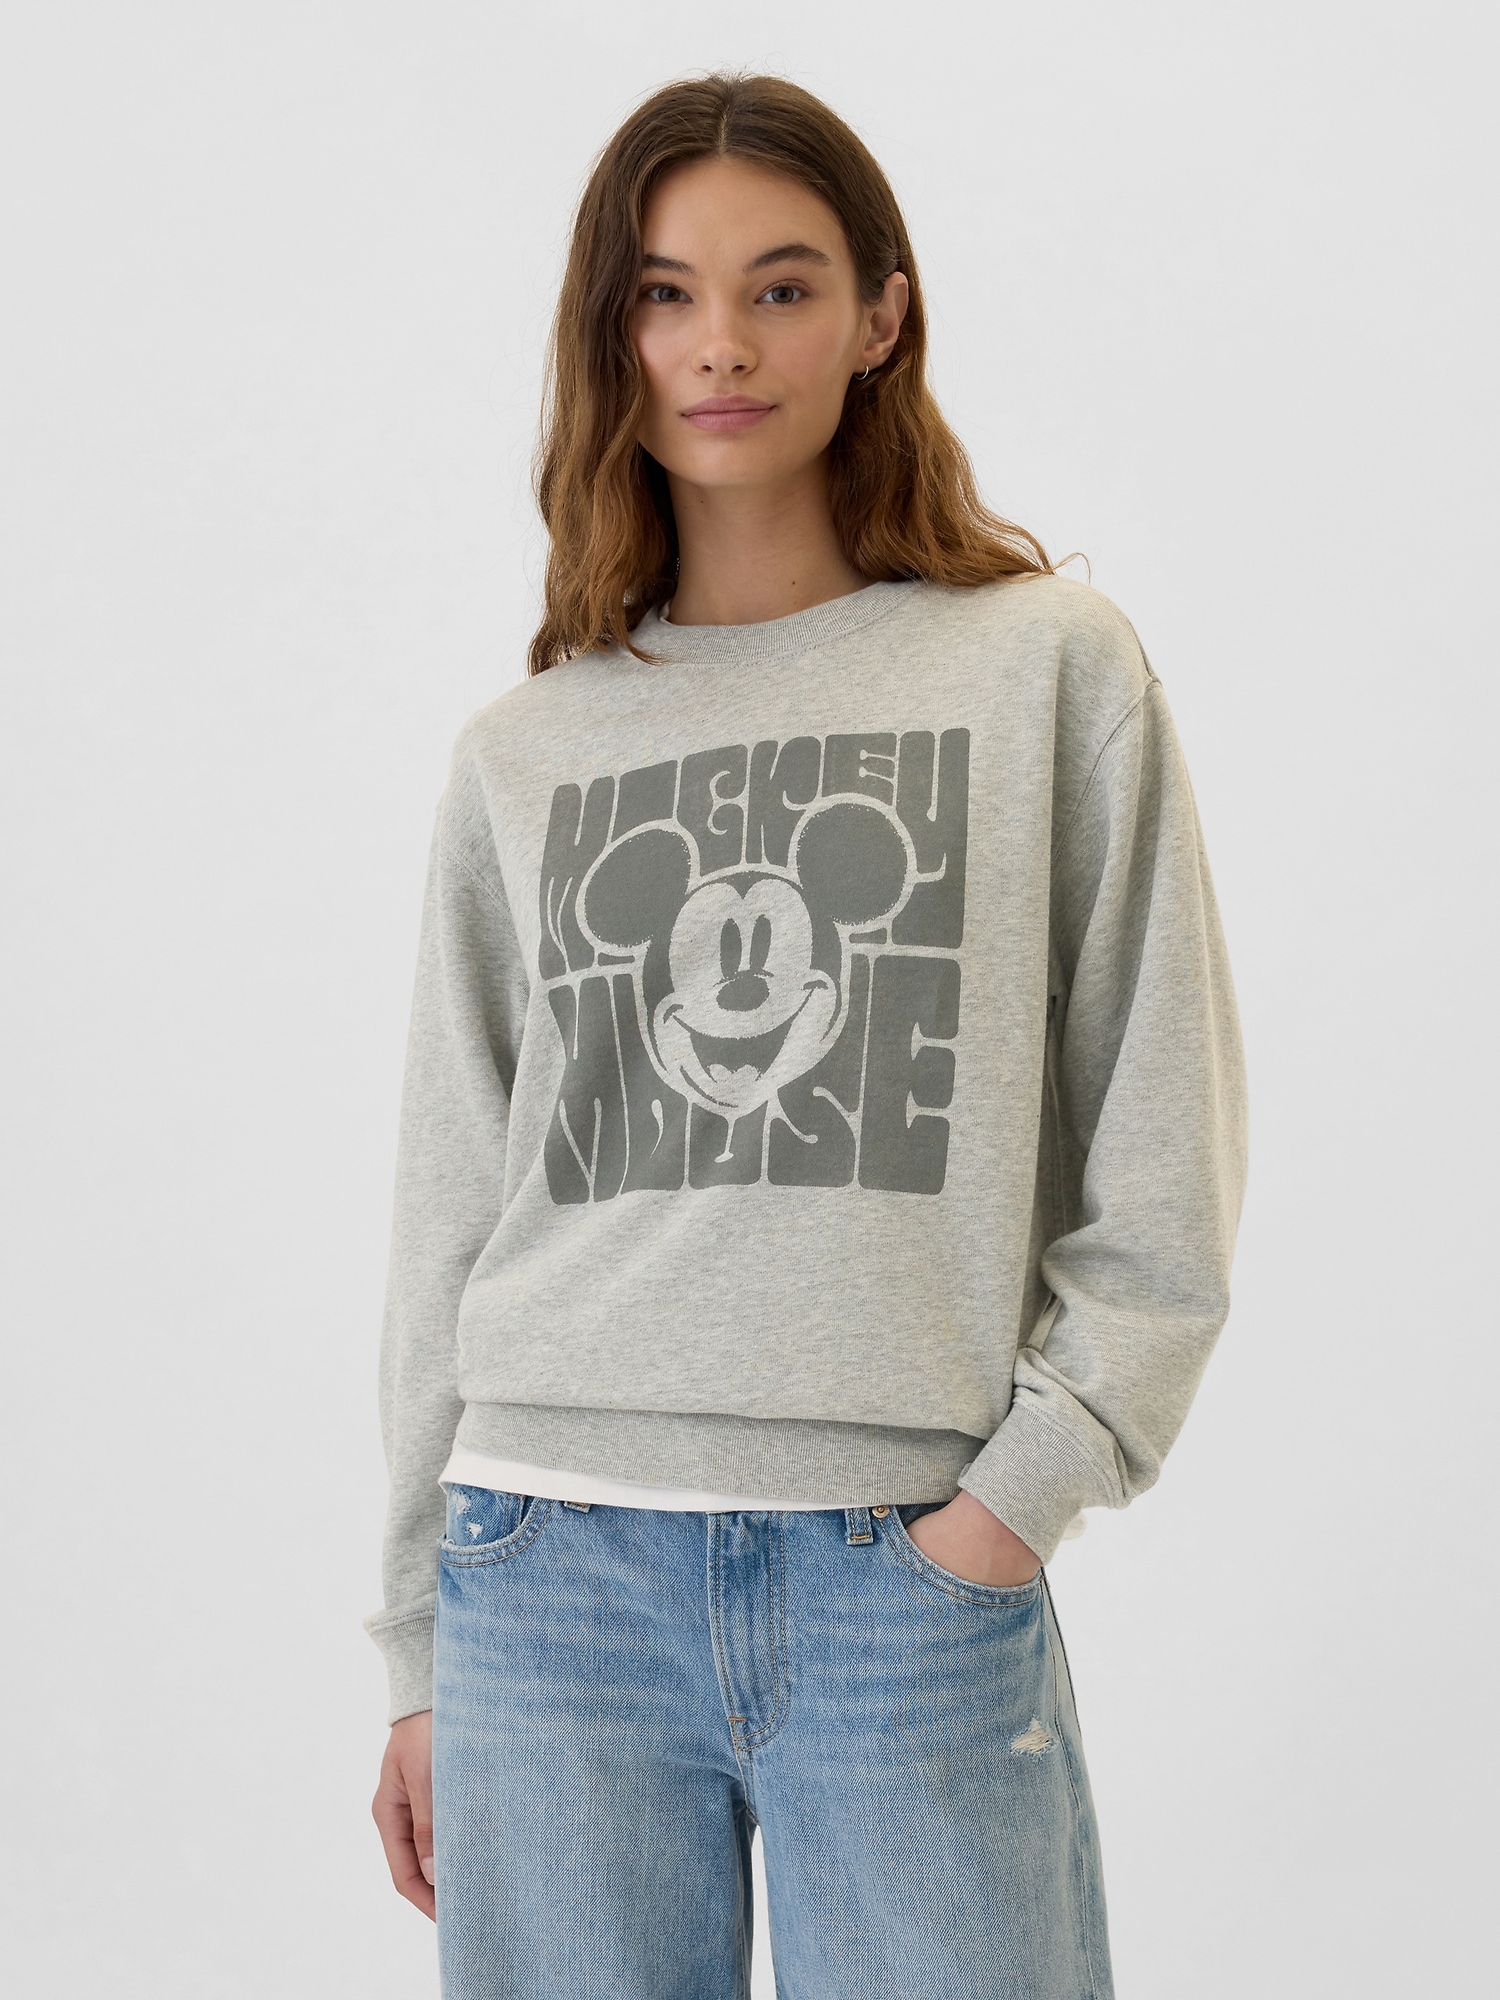 Disney Relaxed Graphic Sweatshirt